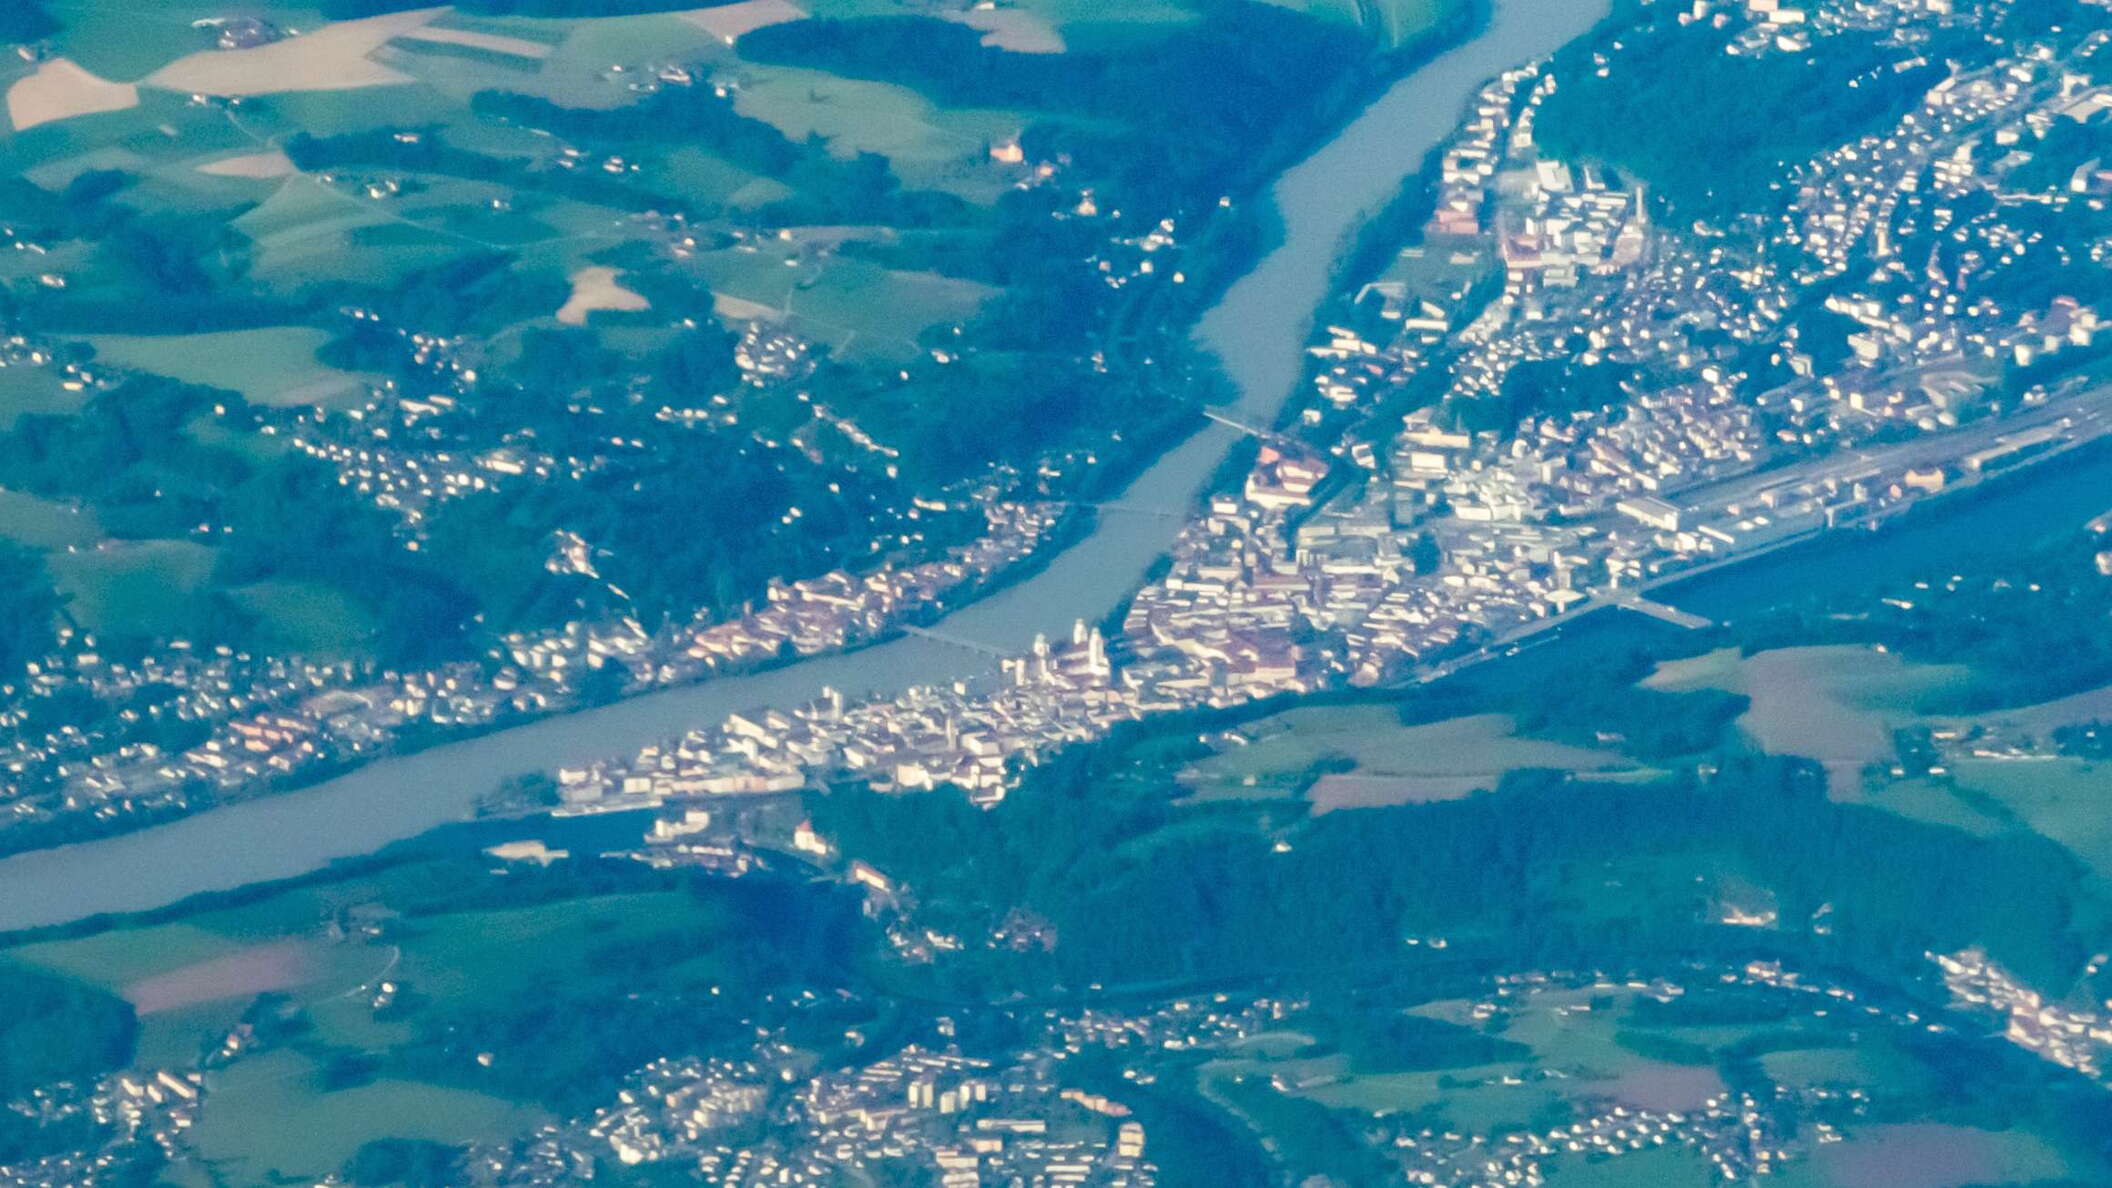 Passau with Danube and Inn